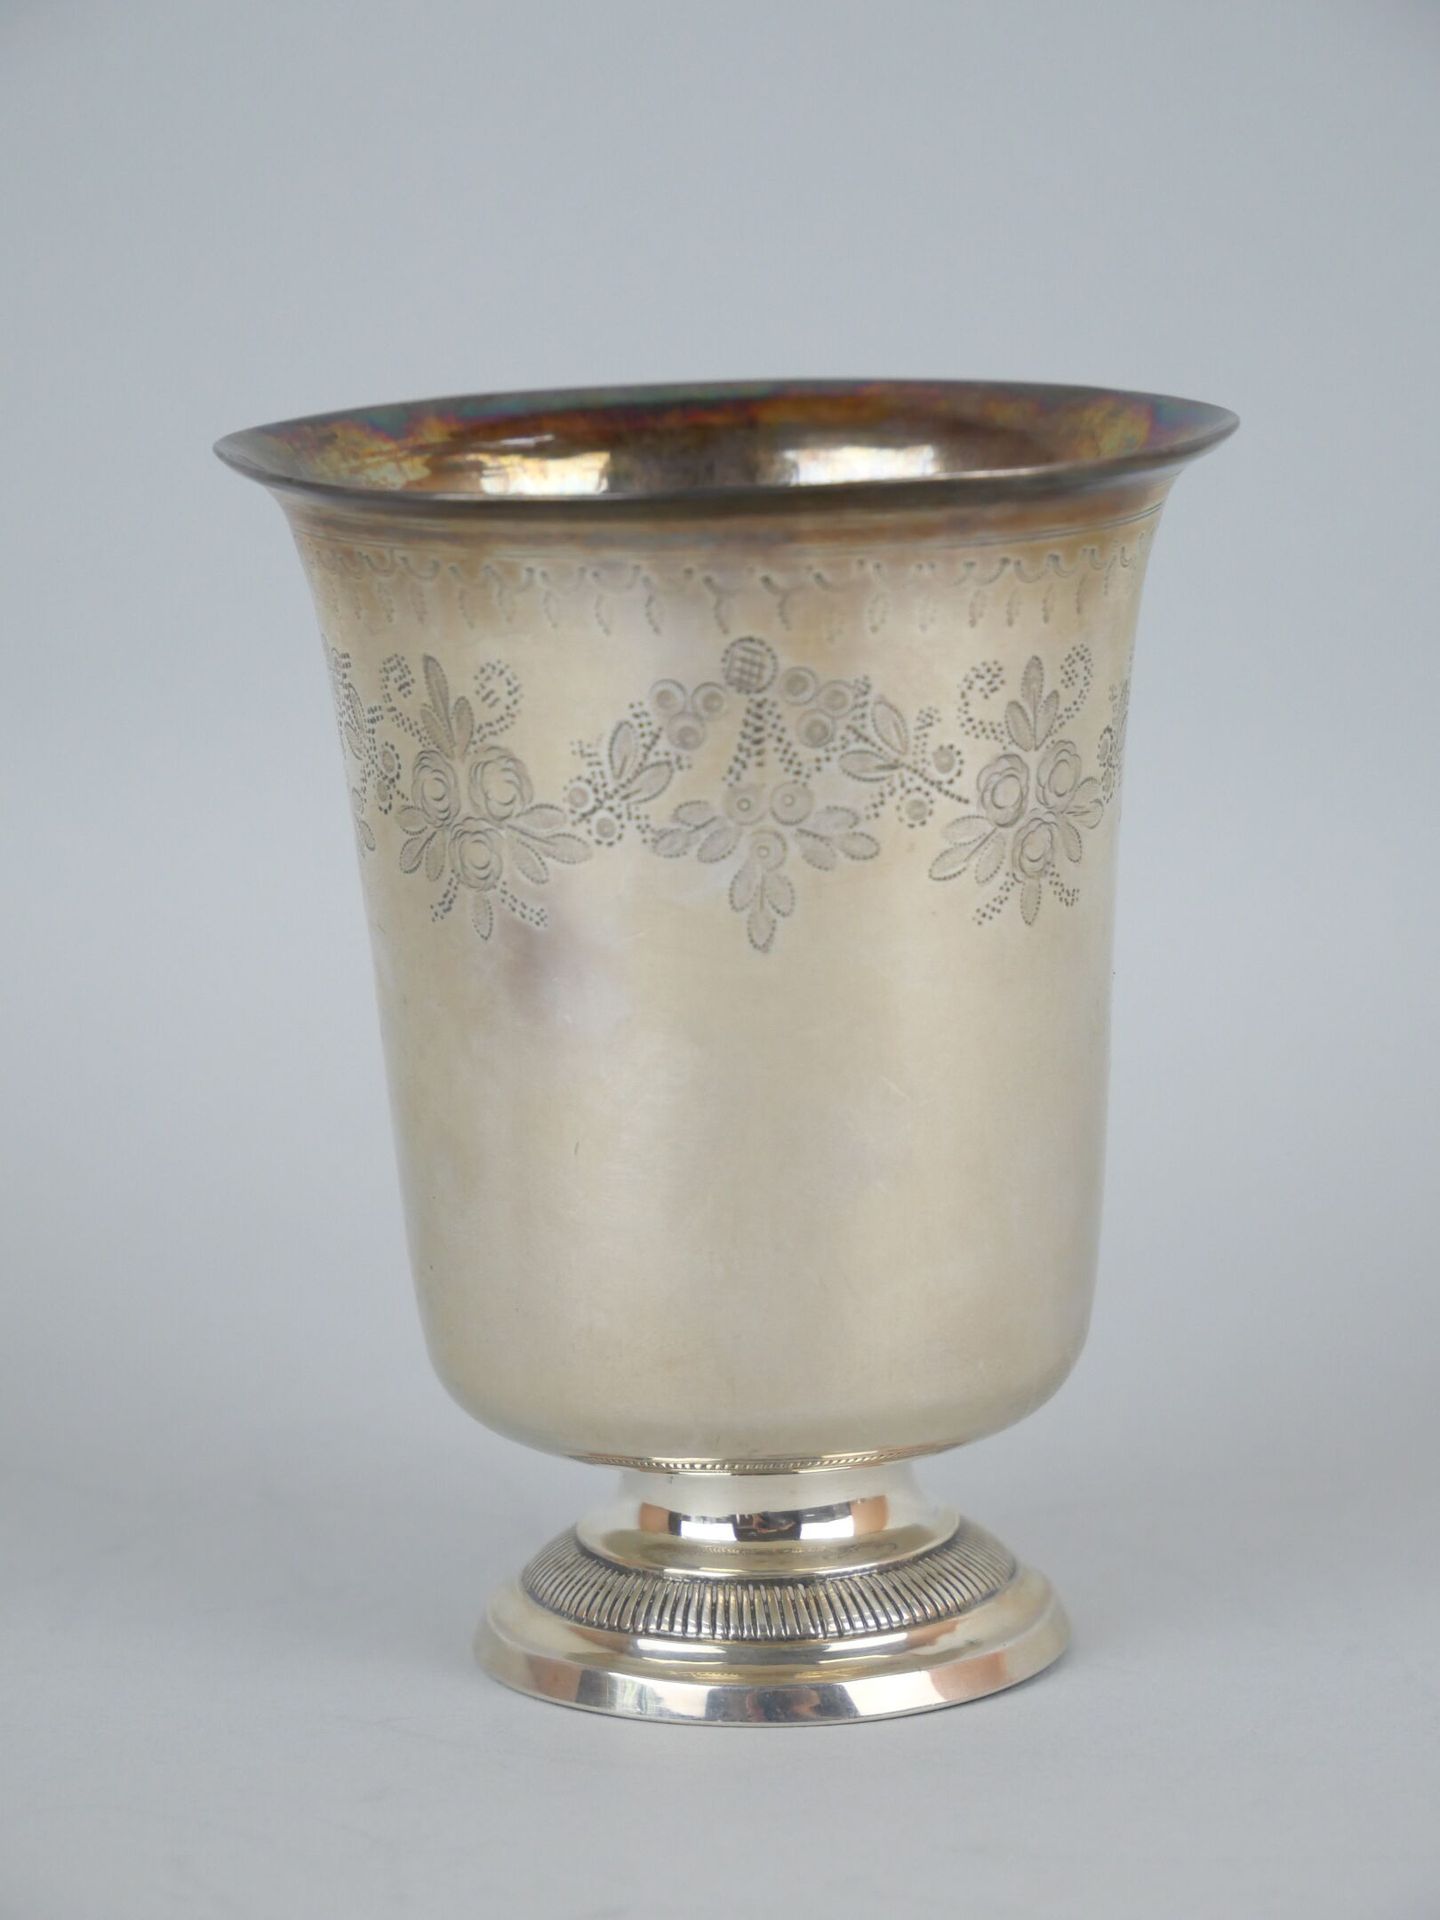 Null 郁金香形状的银质提姆贝尔950千分之一，刻有花环的装饰，放在有神龙装饰的基座上。老人的印记1819-1838。

尺寸：10 x 8 cm - 重量：&hellip;